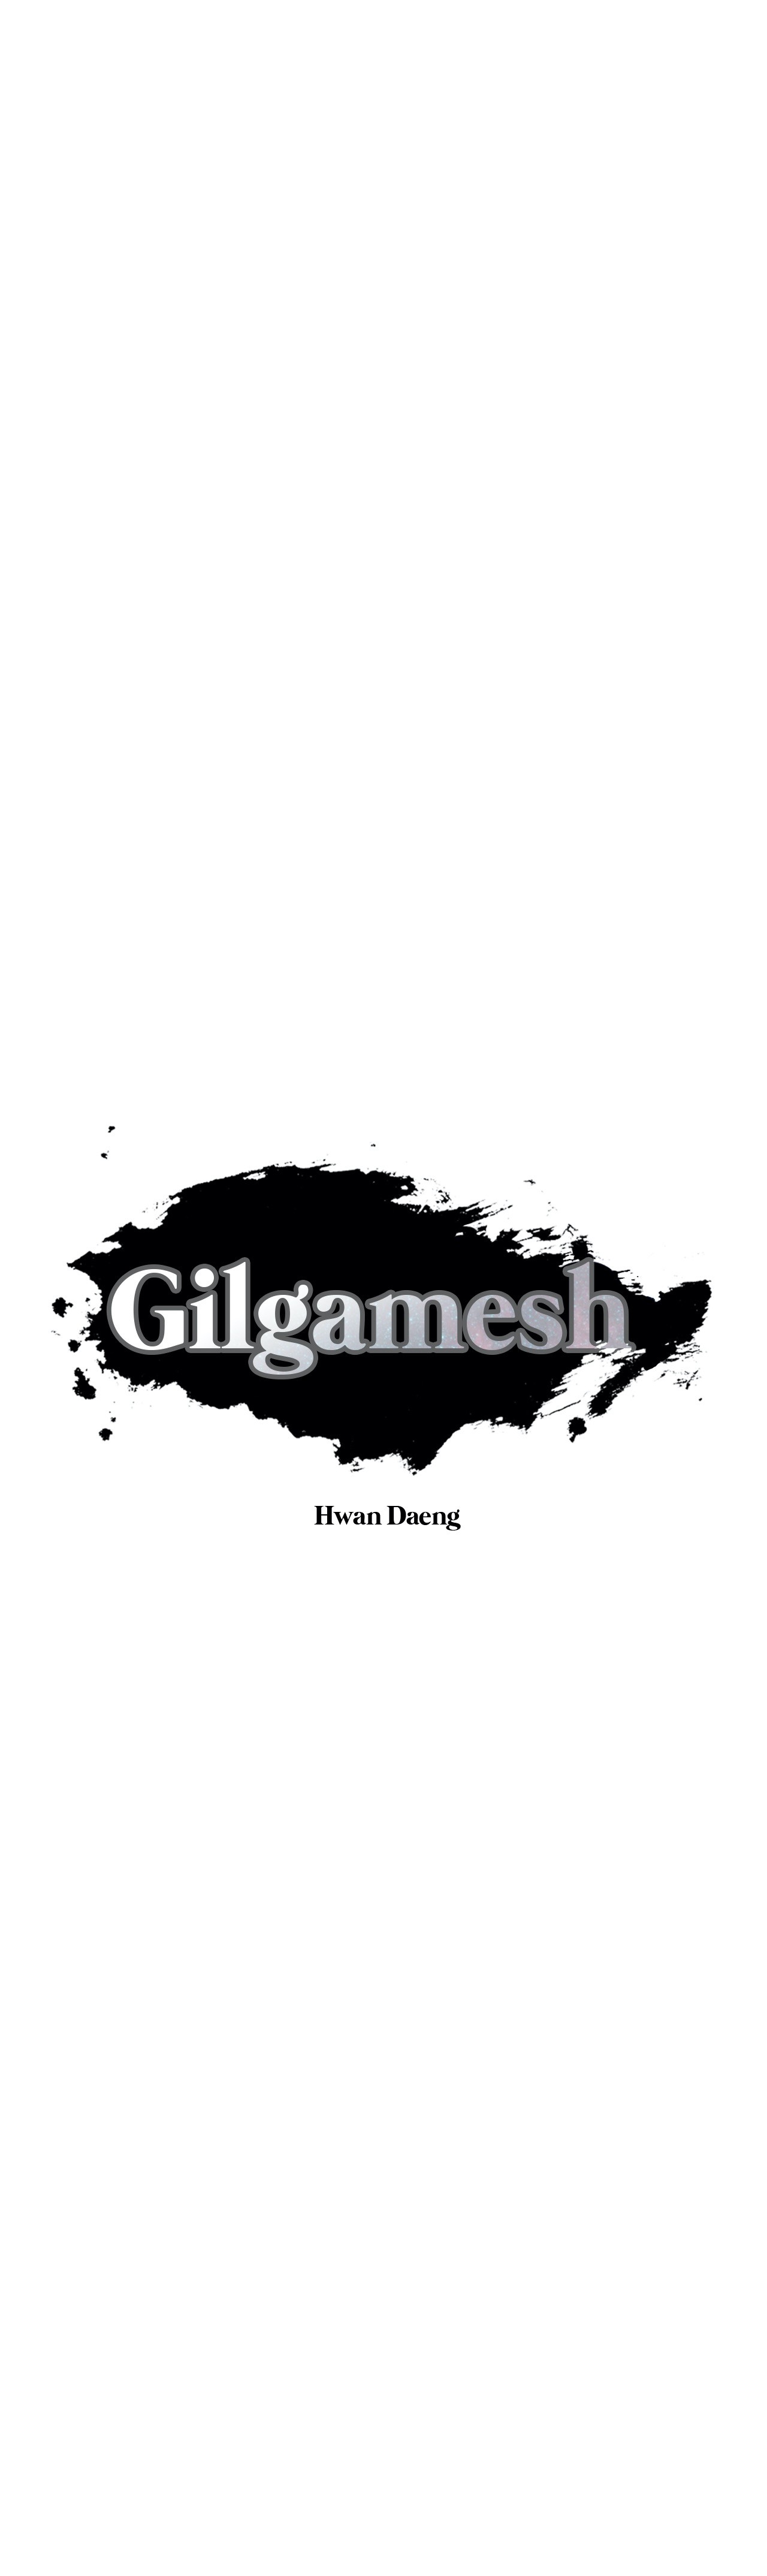 Gilgamesh image